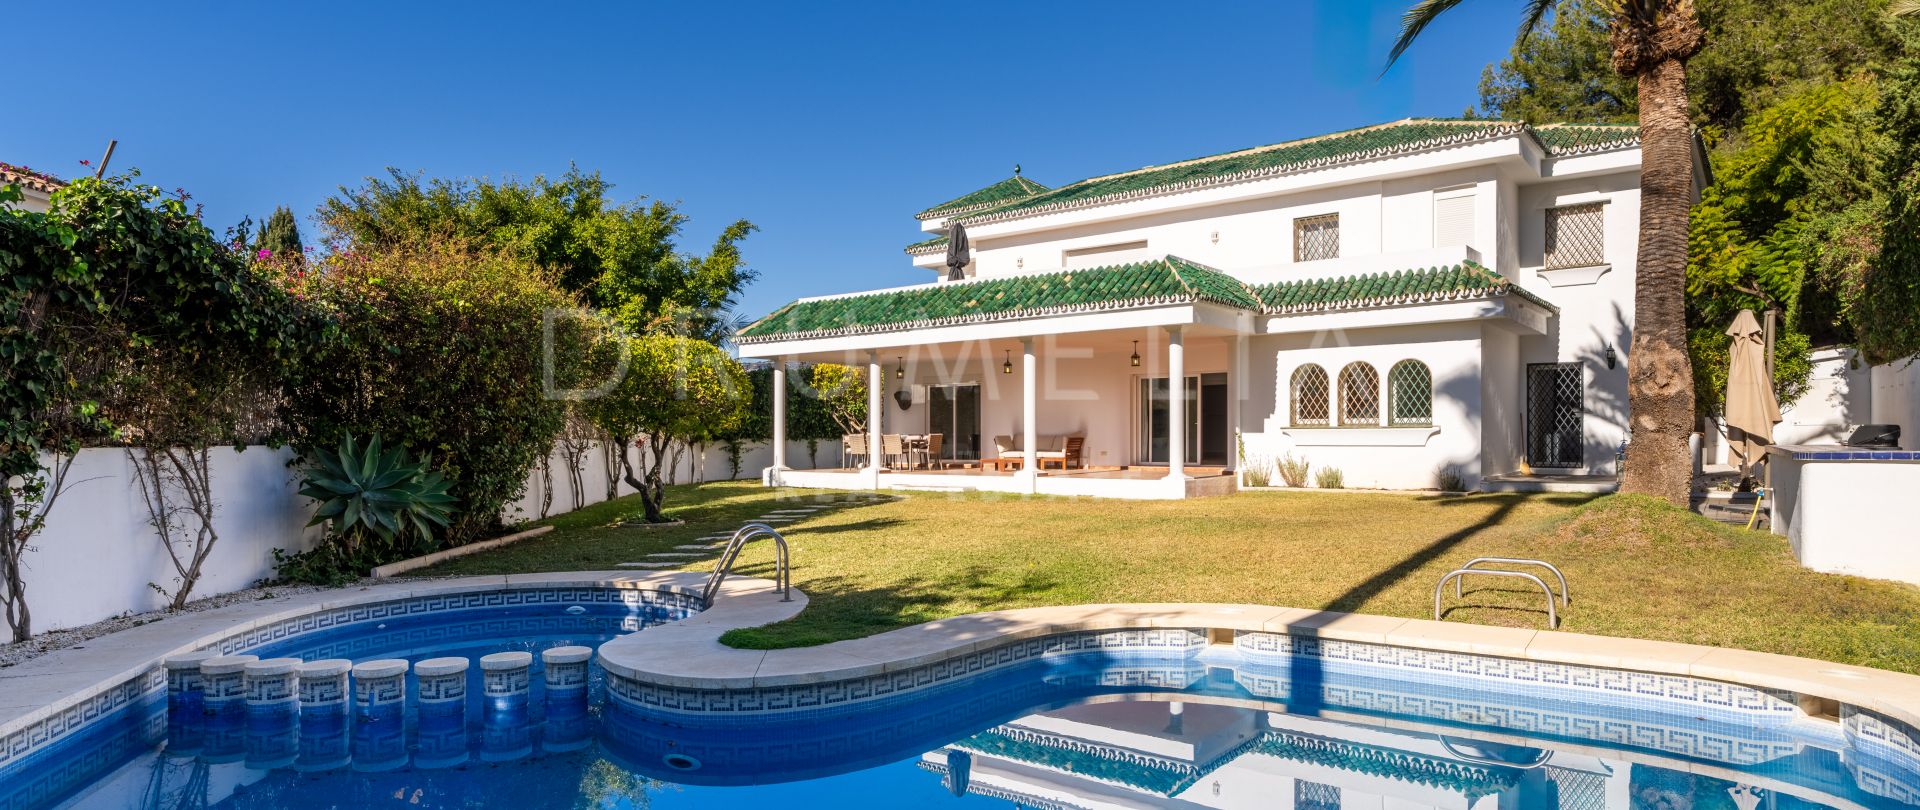 Traditionelle mediterrane Villa mit privatem Pool in bester Lage, Nueva Andalucia